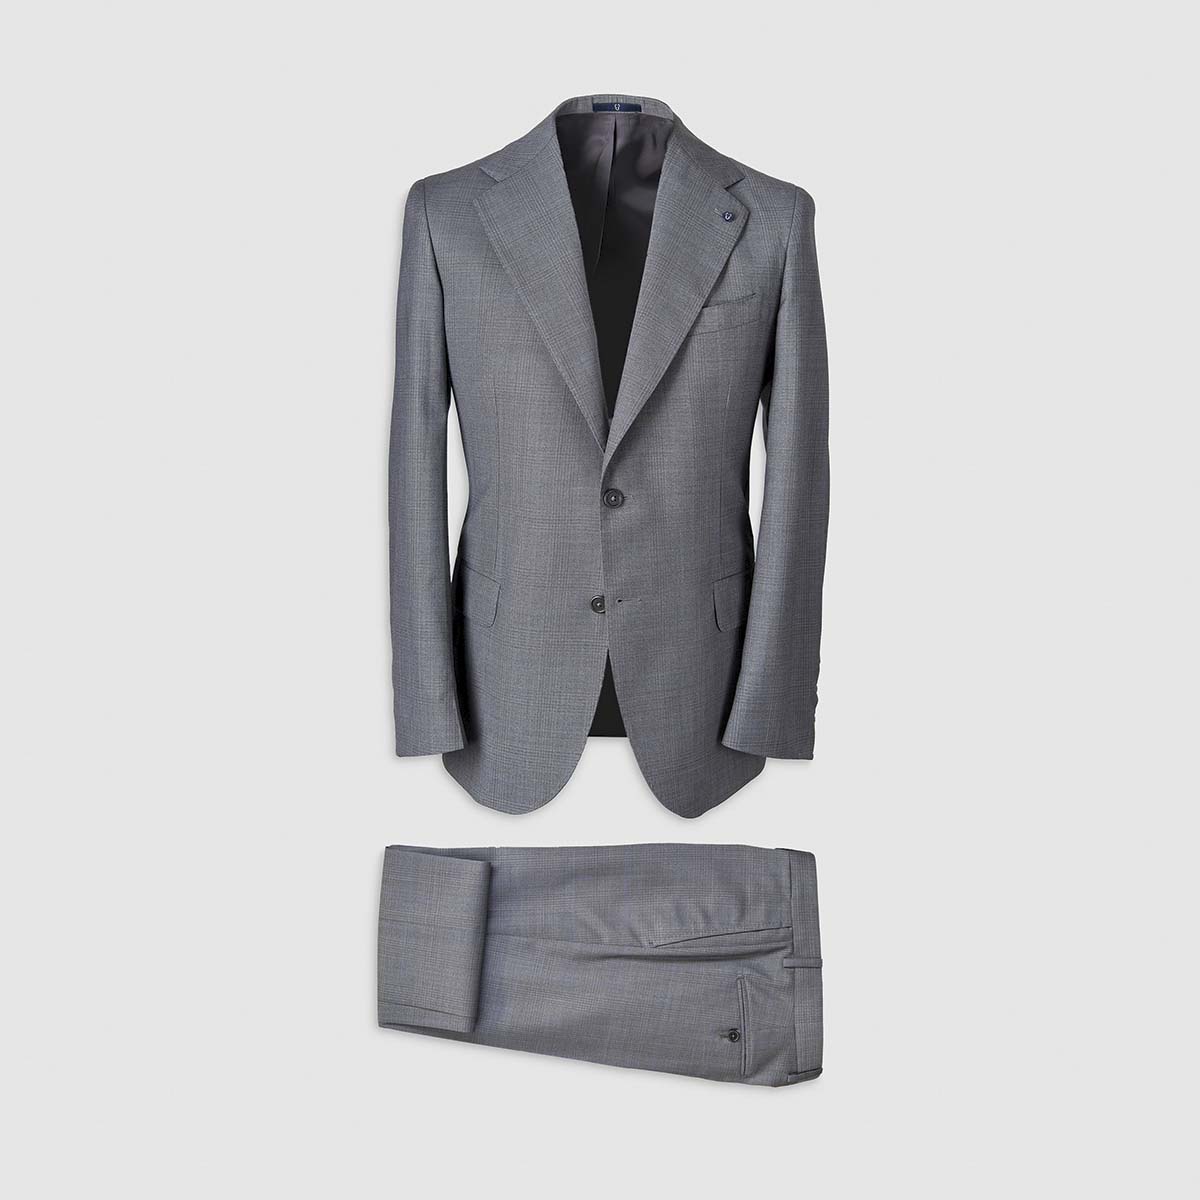 Grey Smart Suit in 130s Four Seasons Wool Melillo 1970 on sale 2022